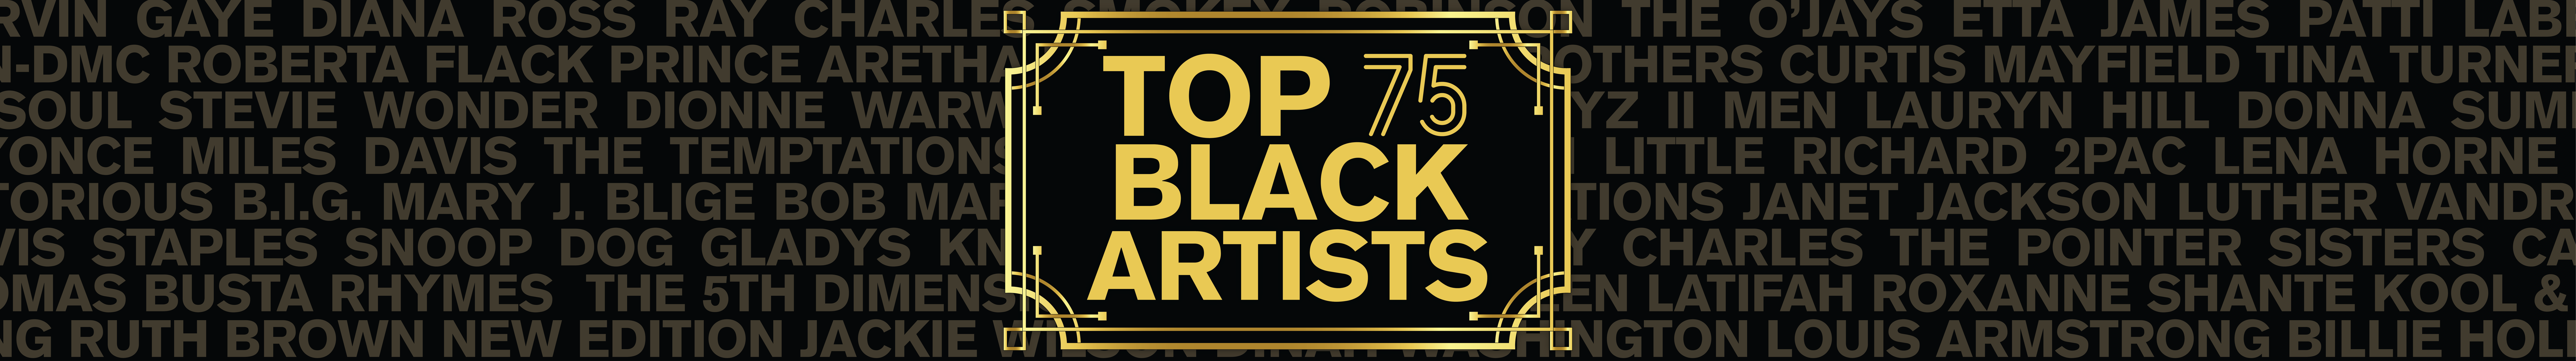 Black History Month, Black artists appreciation, Black musicians, Top 75 Black Artists, WERS 88.9 FM